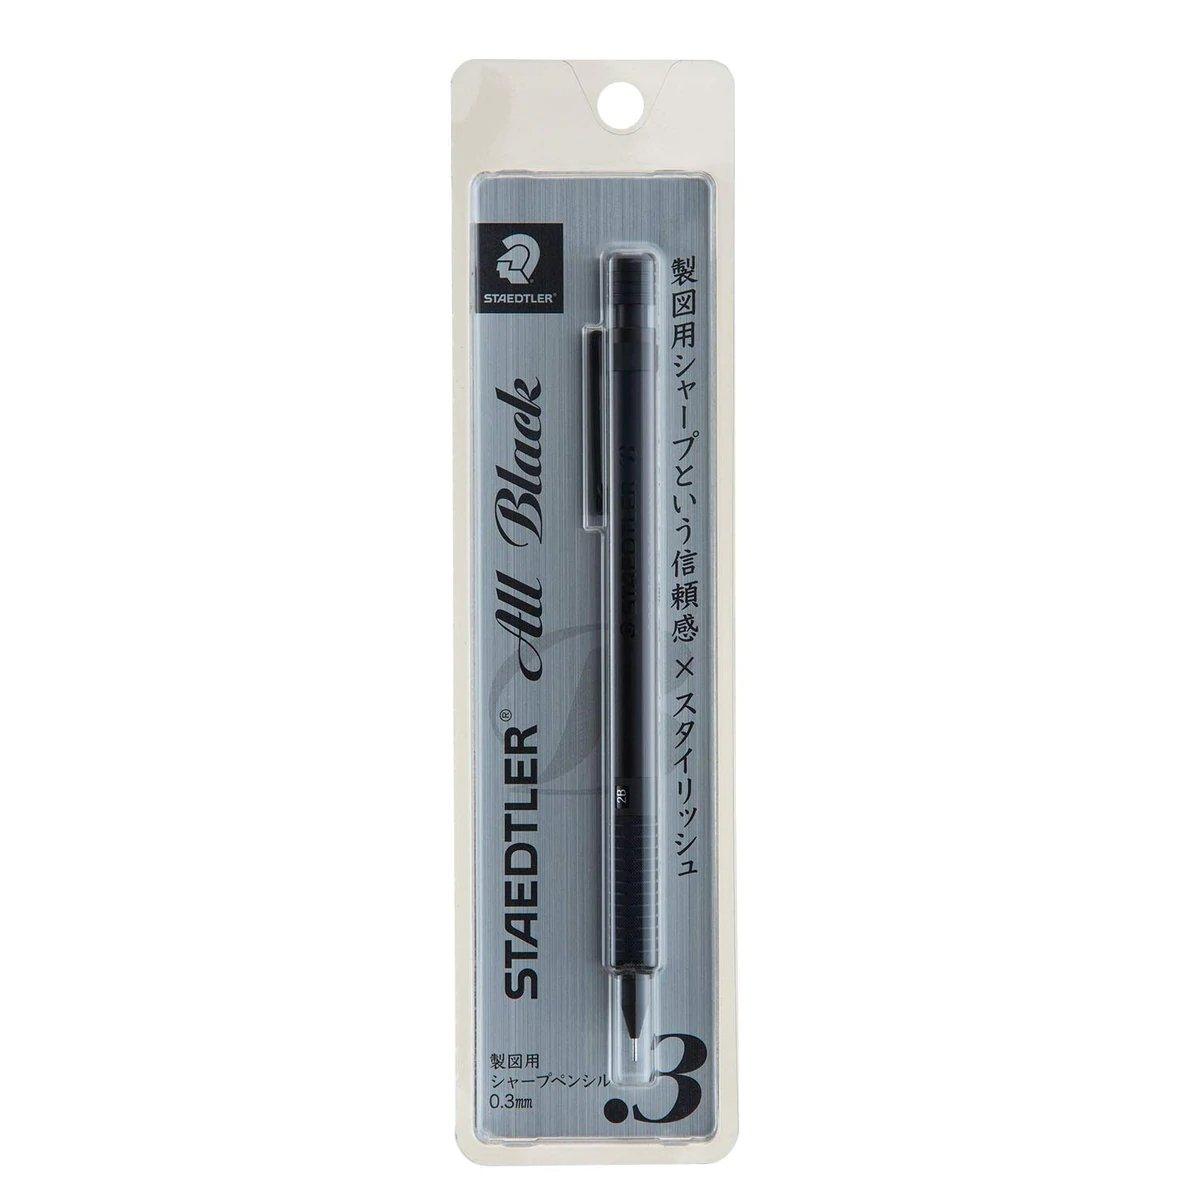 Staedtler 925 35 Limited Edition Mechanical Pencil 0.5mm